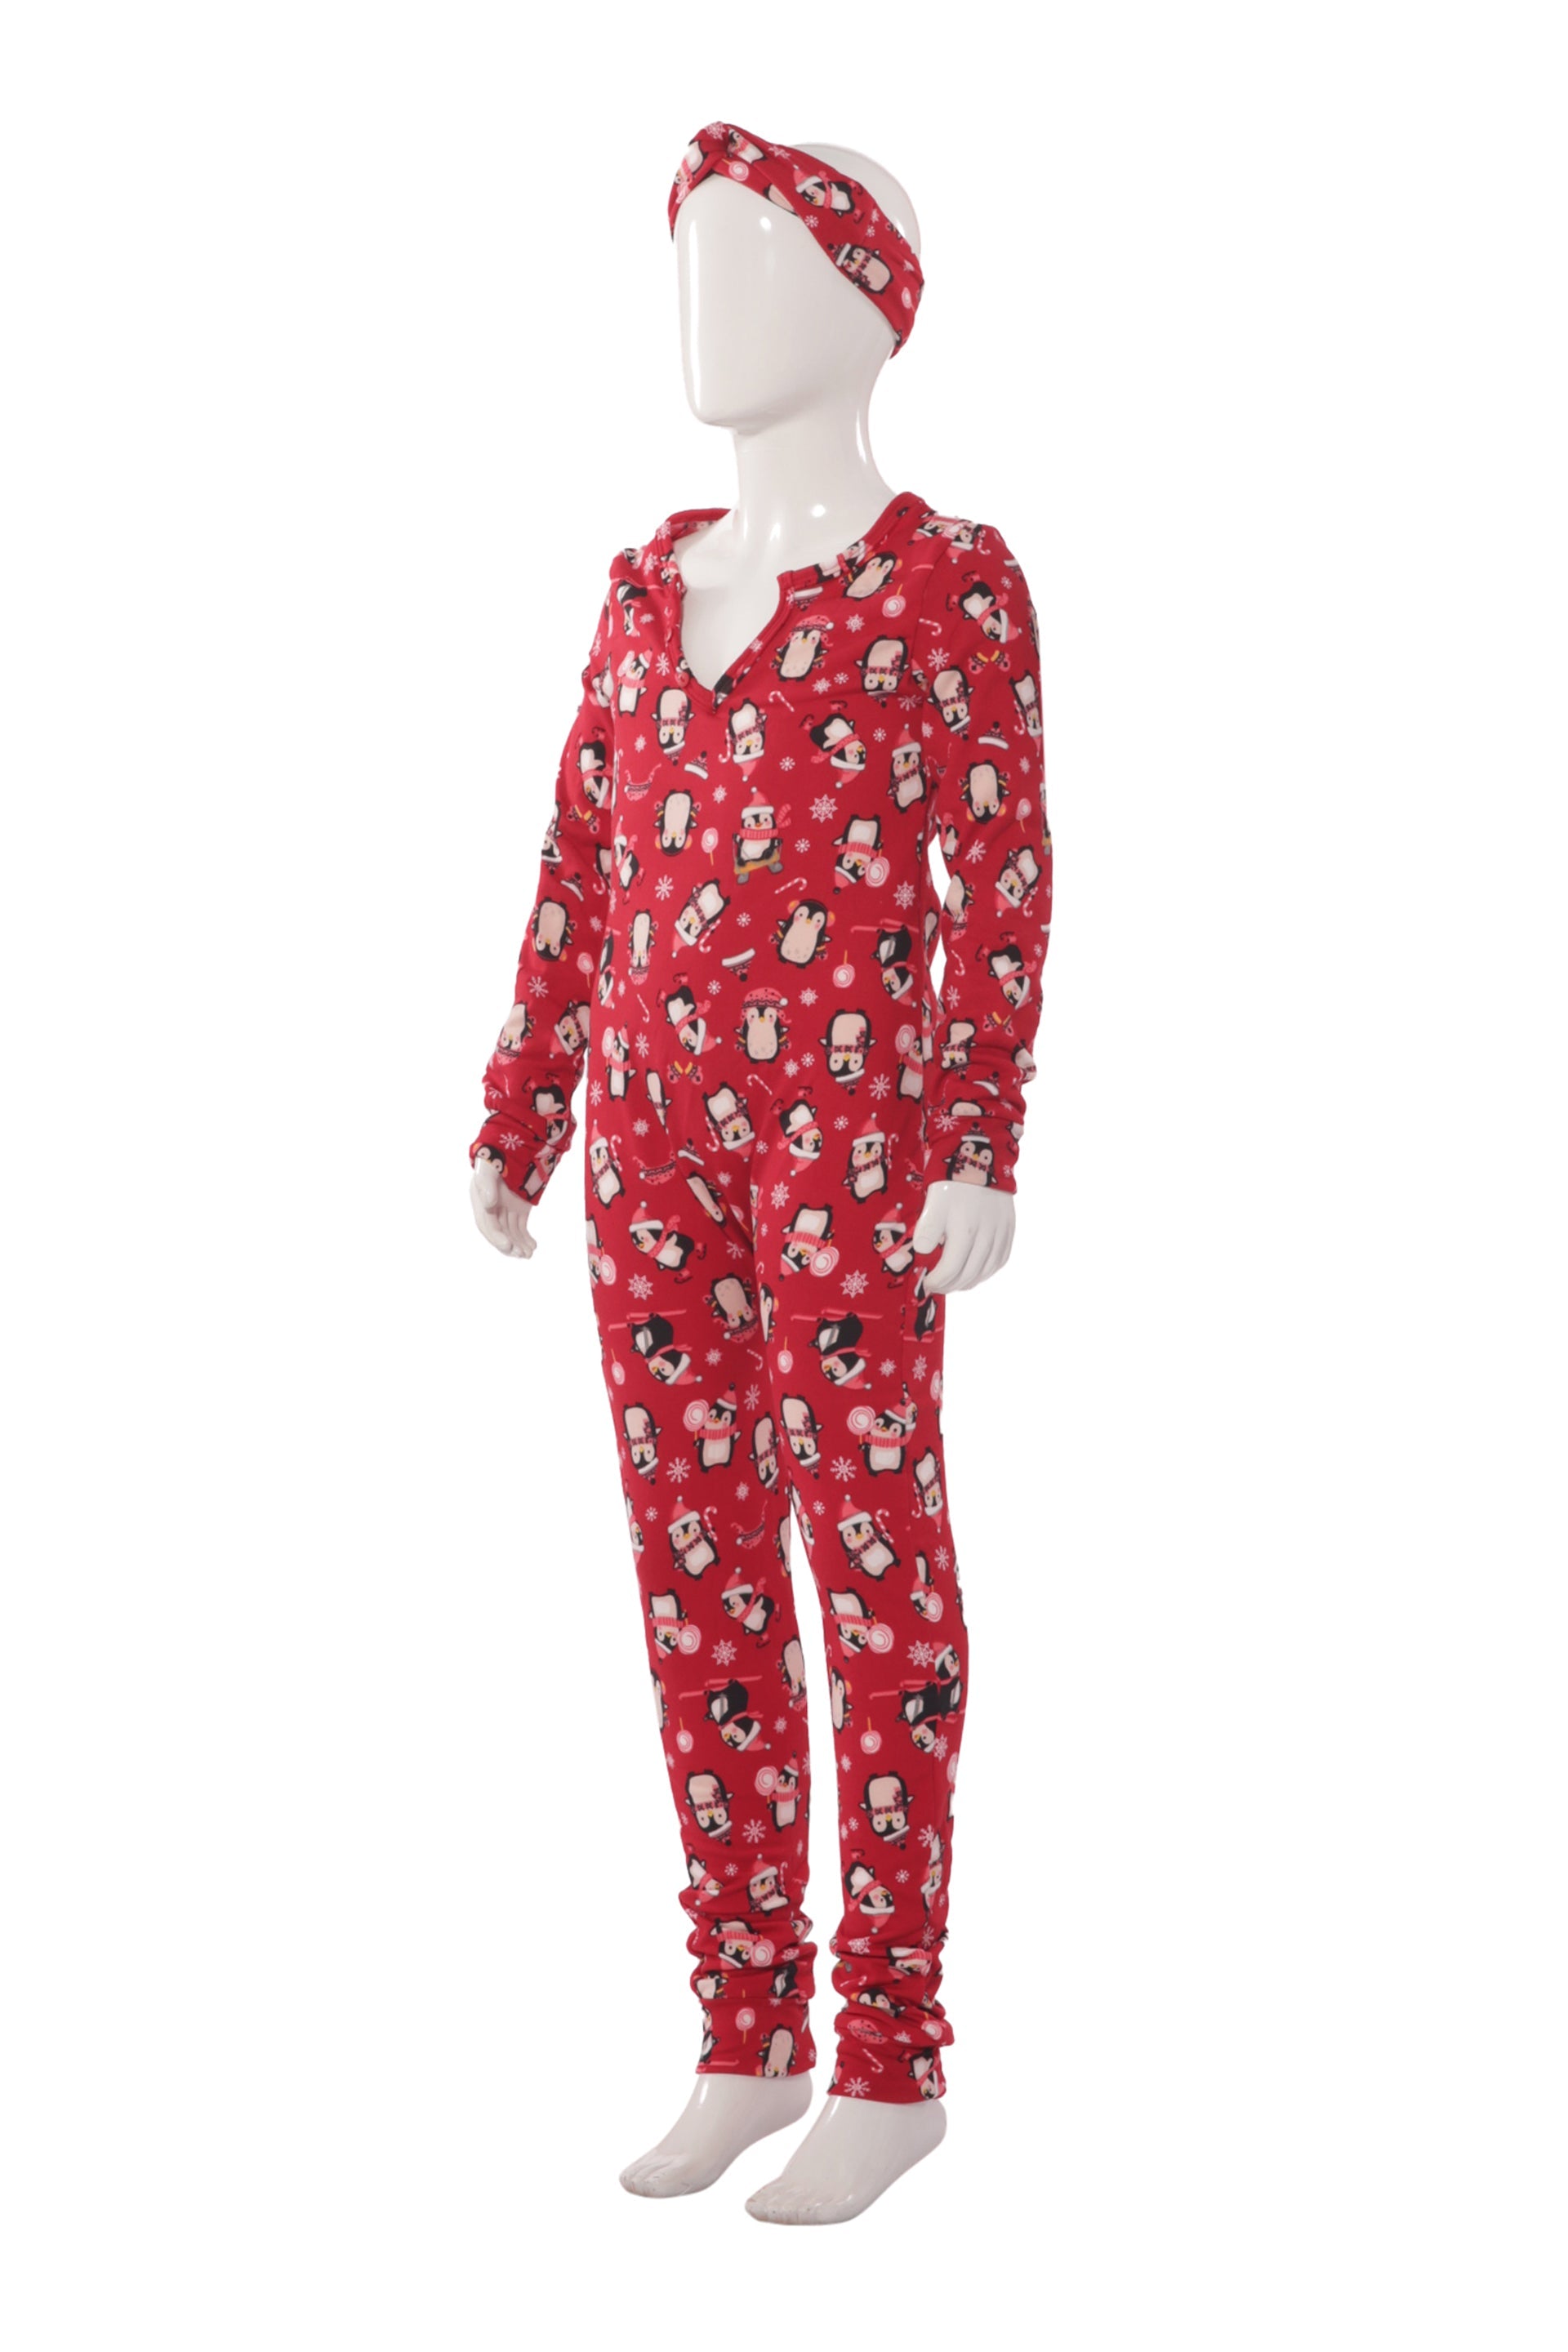 Wholesale Kids Christmas Print Fleece Lined Jumpsuit Onesie Pajamas - Red Penguins